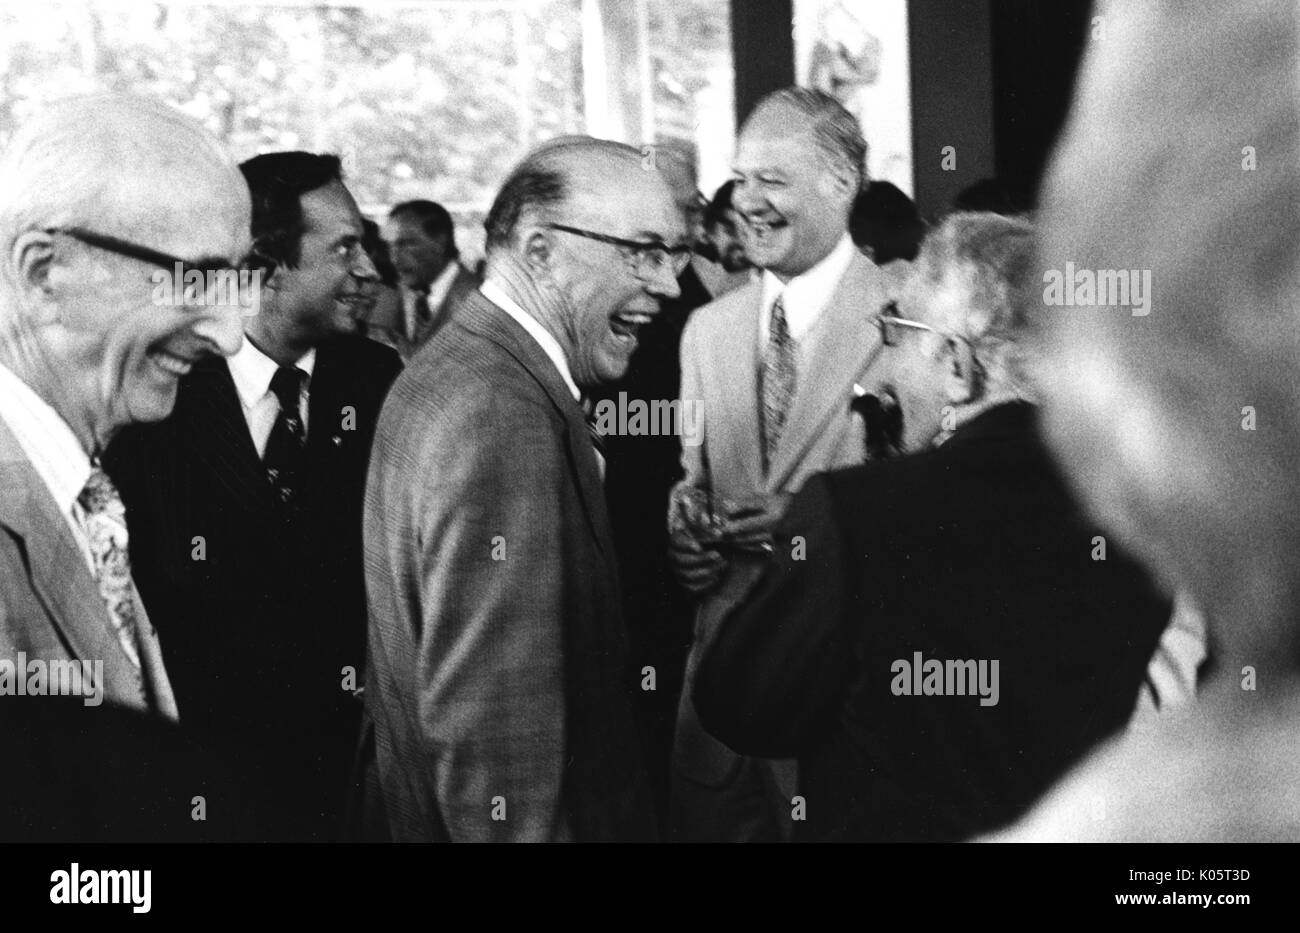 Milton S Eisenhower, ehemaliger Präsident der Johns Hopkins University, lachend unter anderem, nehmen alle an der Centennial Ball Opening Ceremony, 1976, Teil. Stockfoto